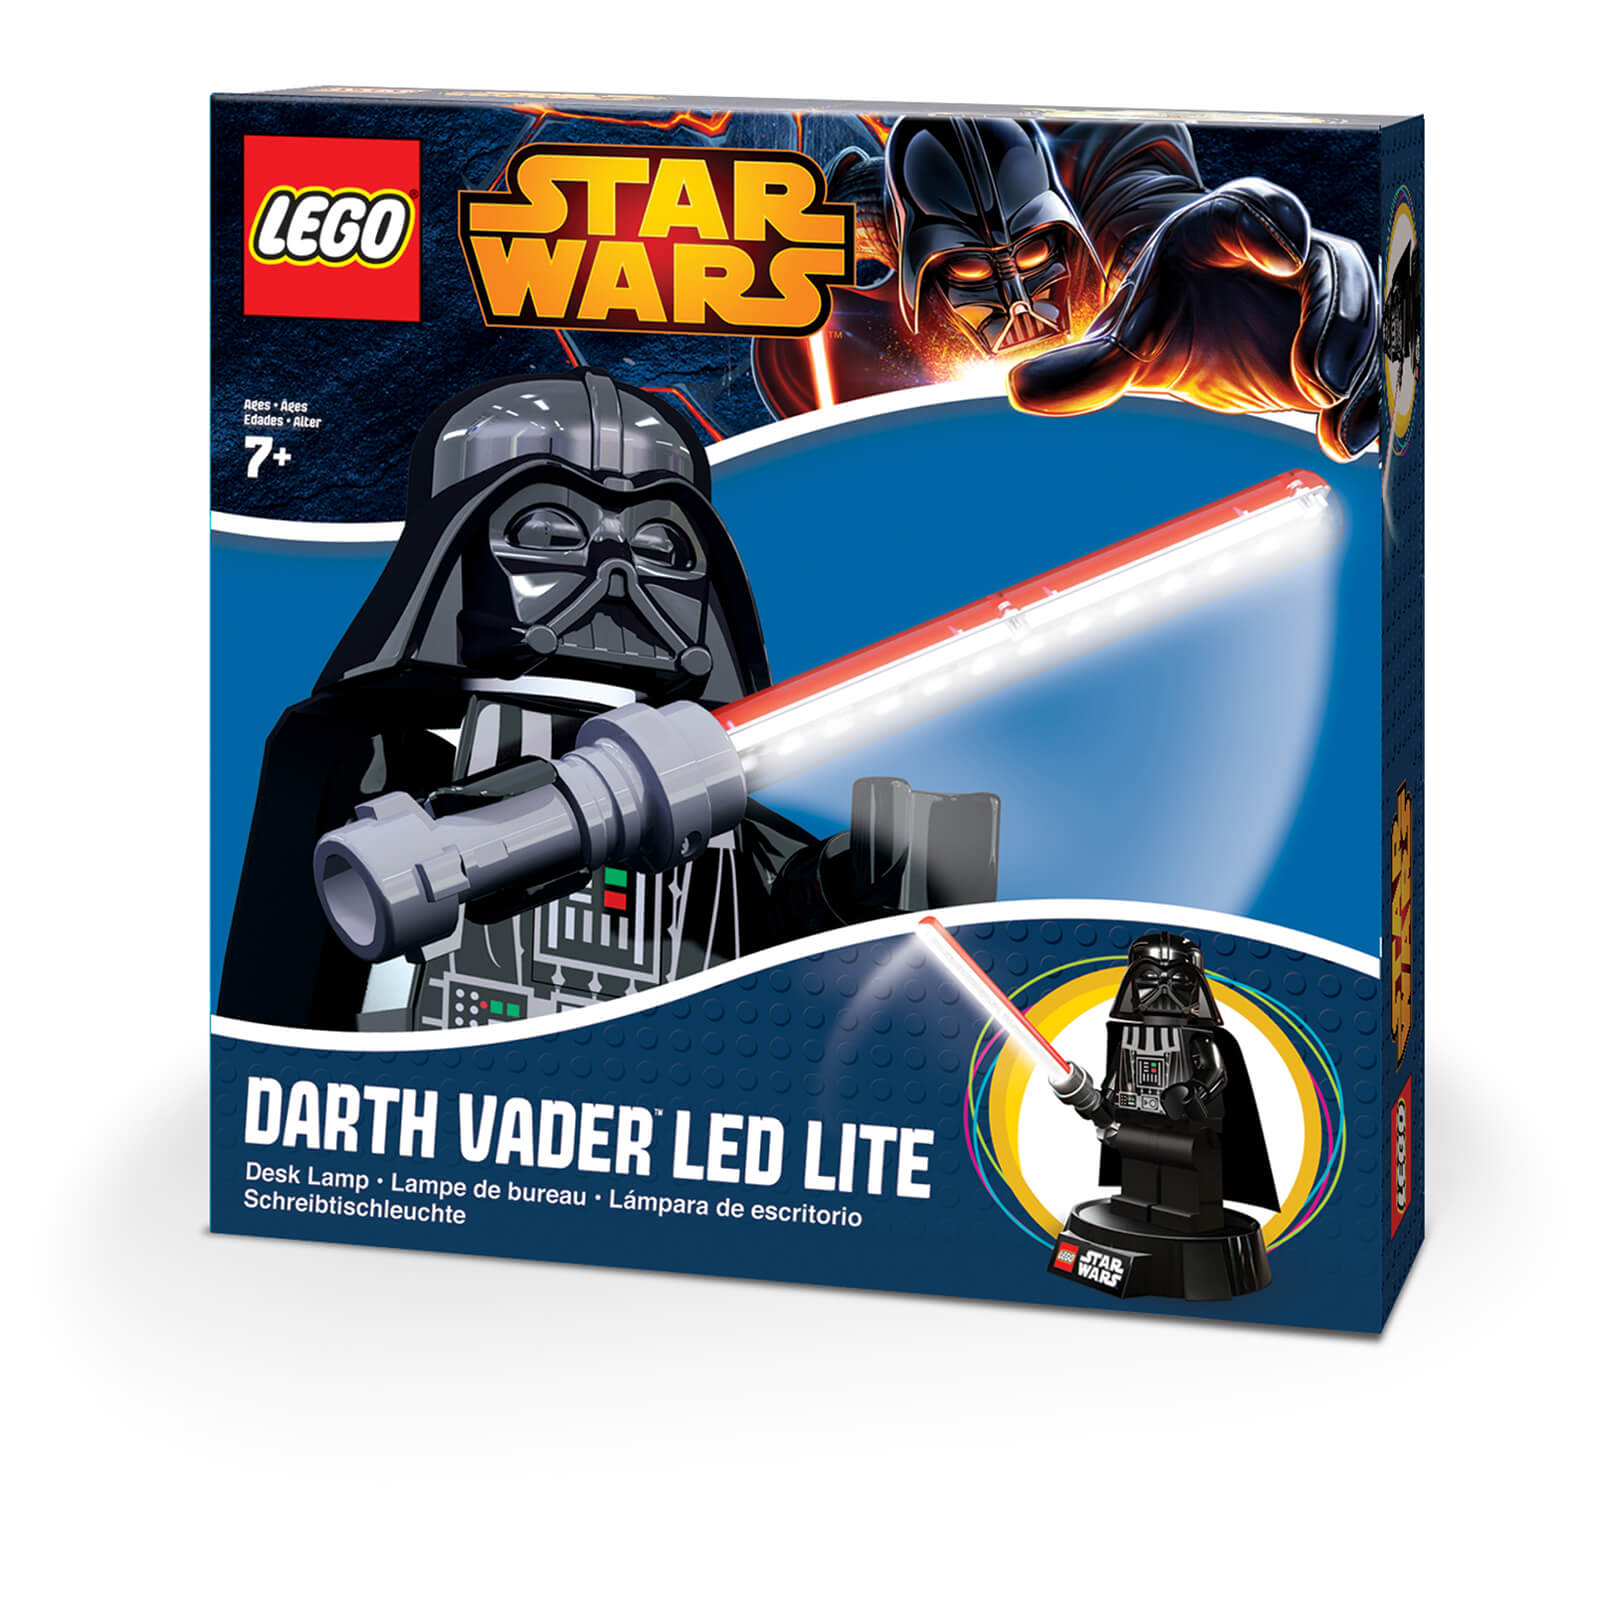 Lego Star Wars Darth Vader Desk Lamp With Batteries regarding size 1600 X 1600